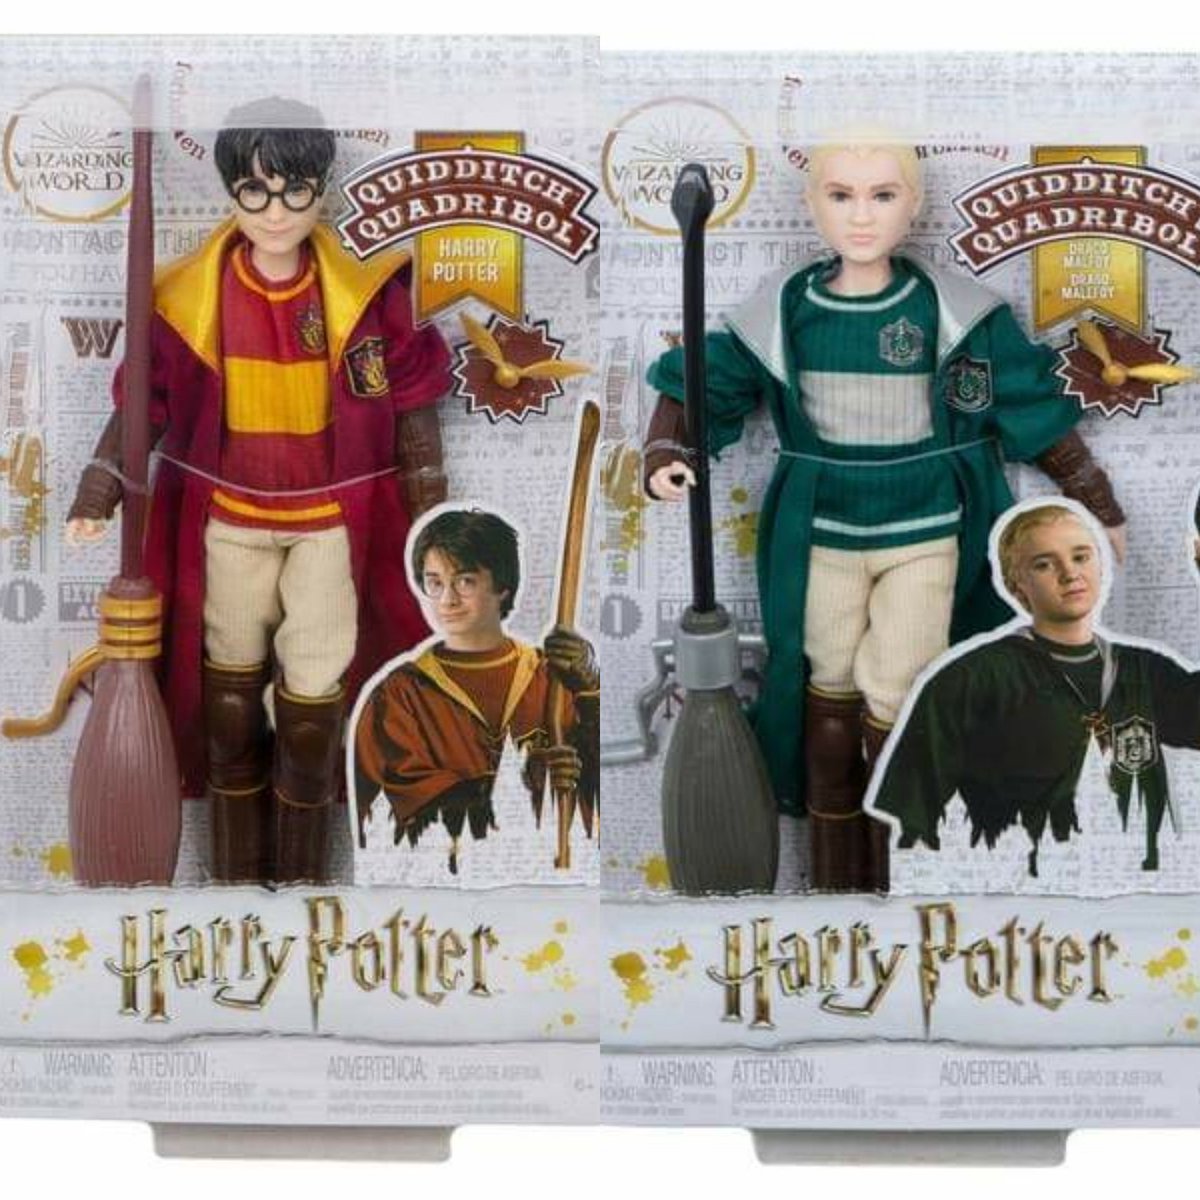 Univers Harry Potter on X: #ProduitsDérivés : @Mattel ajoutera